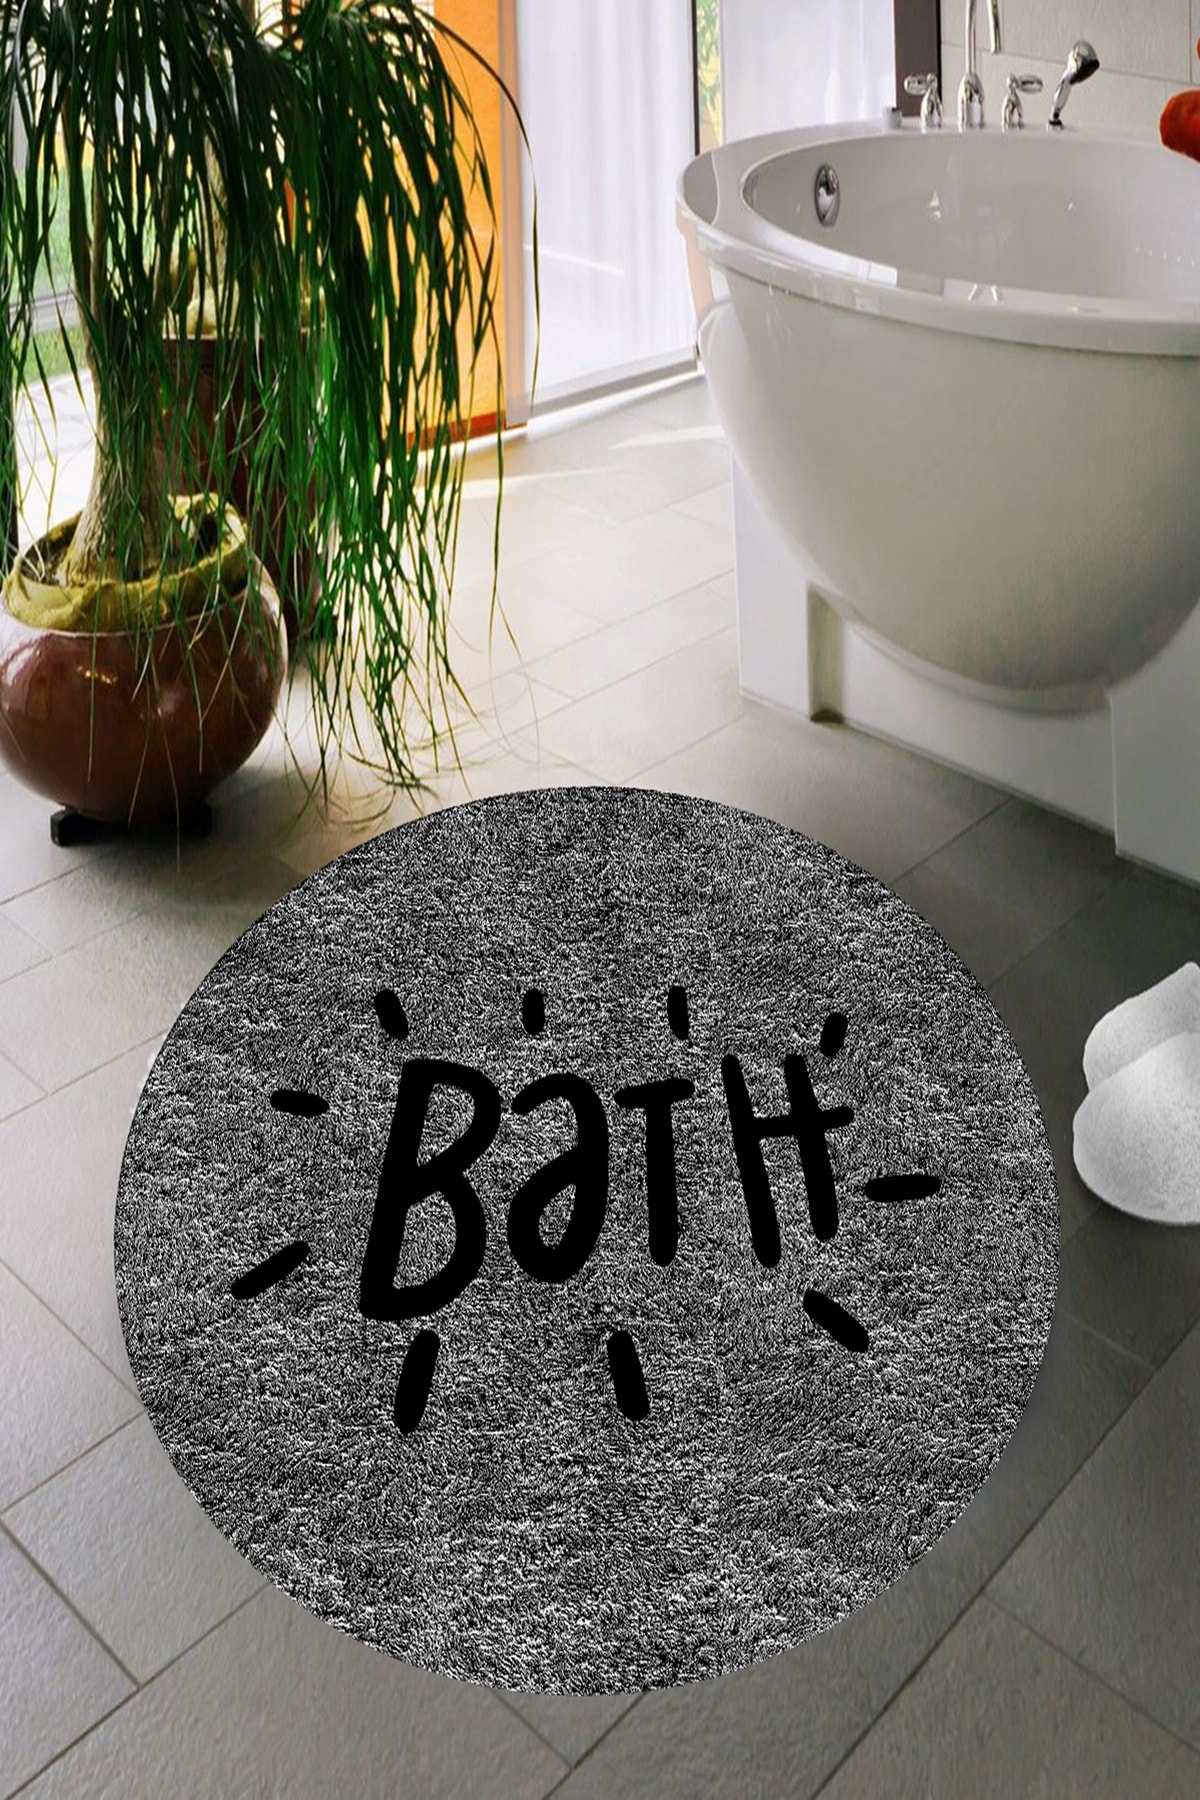 Decomia Home Dijital Baskı Kaymaz Taban Yıkanabilir Bath Yazılı Banyo Paspası Dc 8025 gri